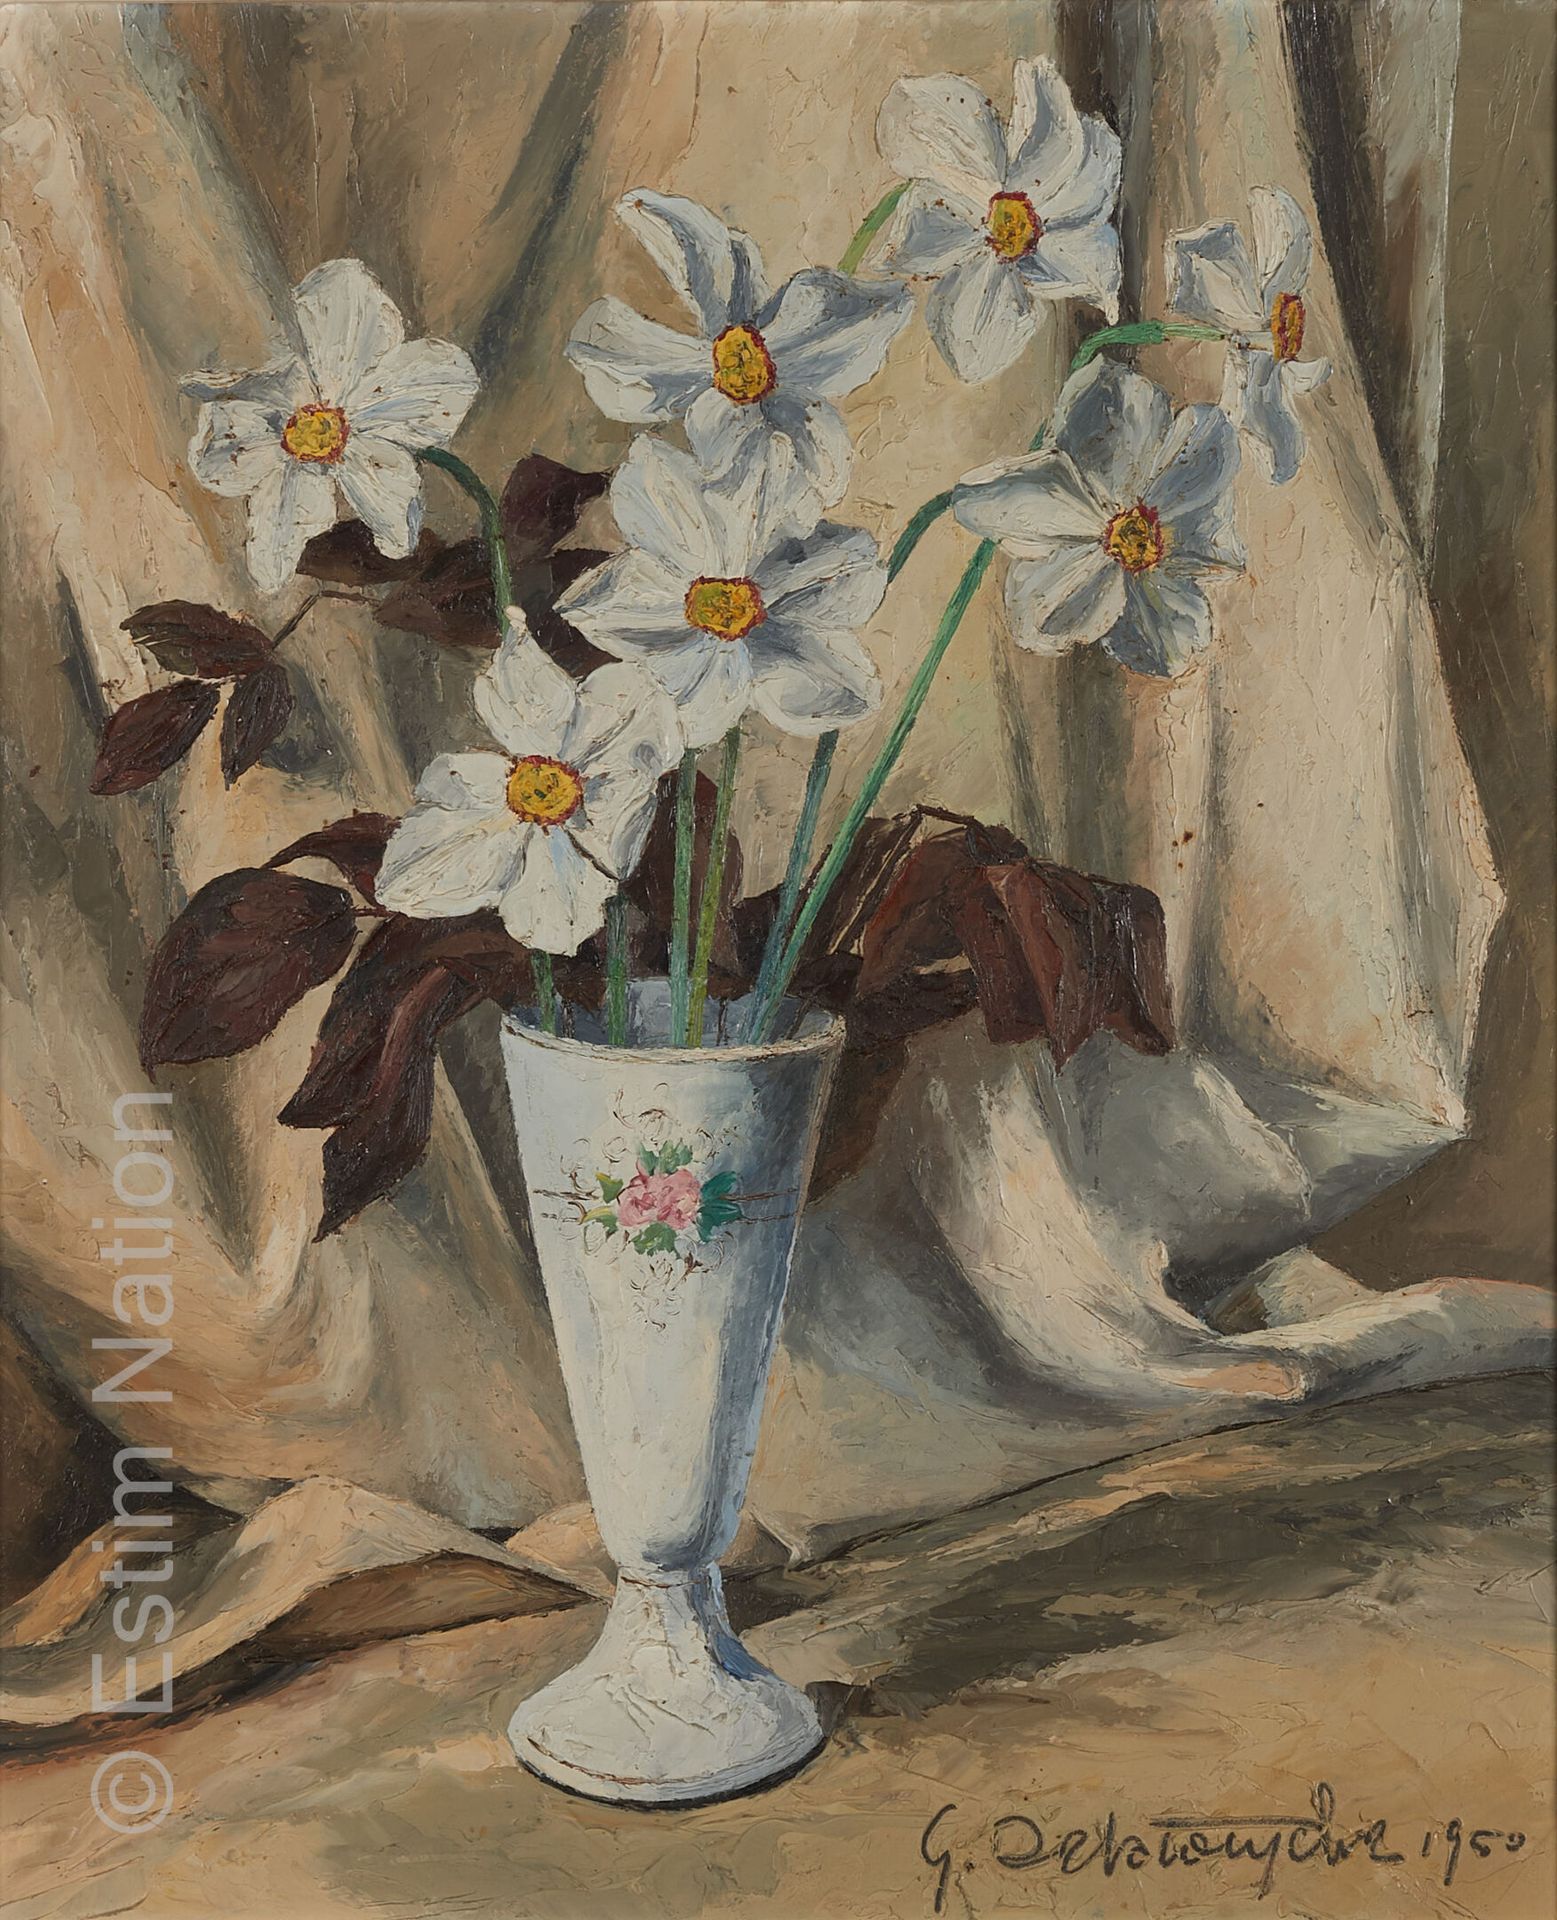 ART DU XXE SIECLE Germain DELATOUSCHE (1898-1966)

"Narcissus"
Still life with w&hellip;